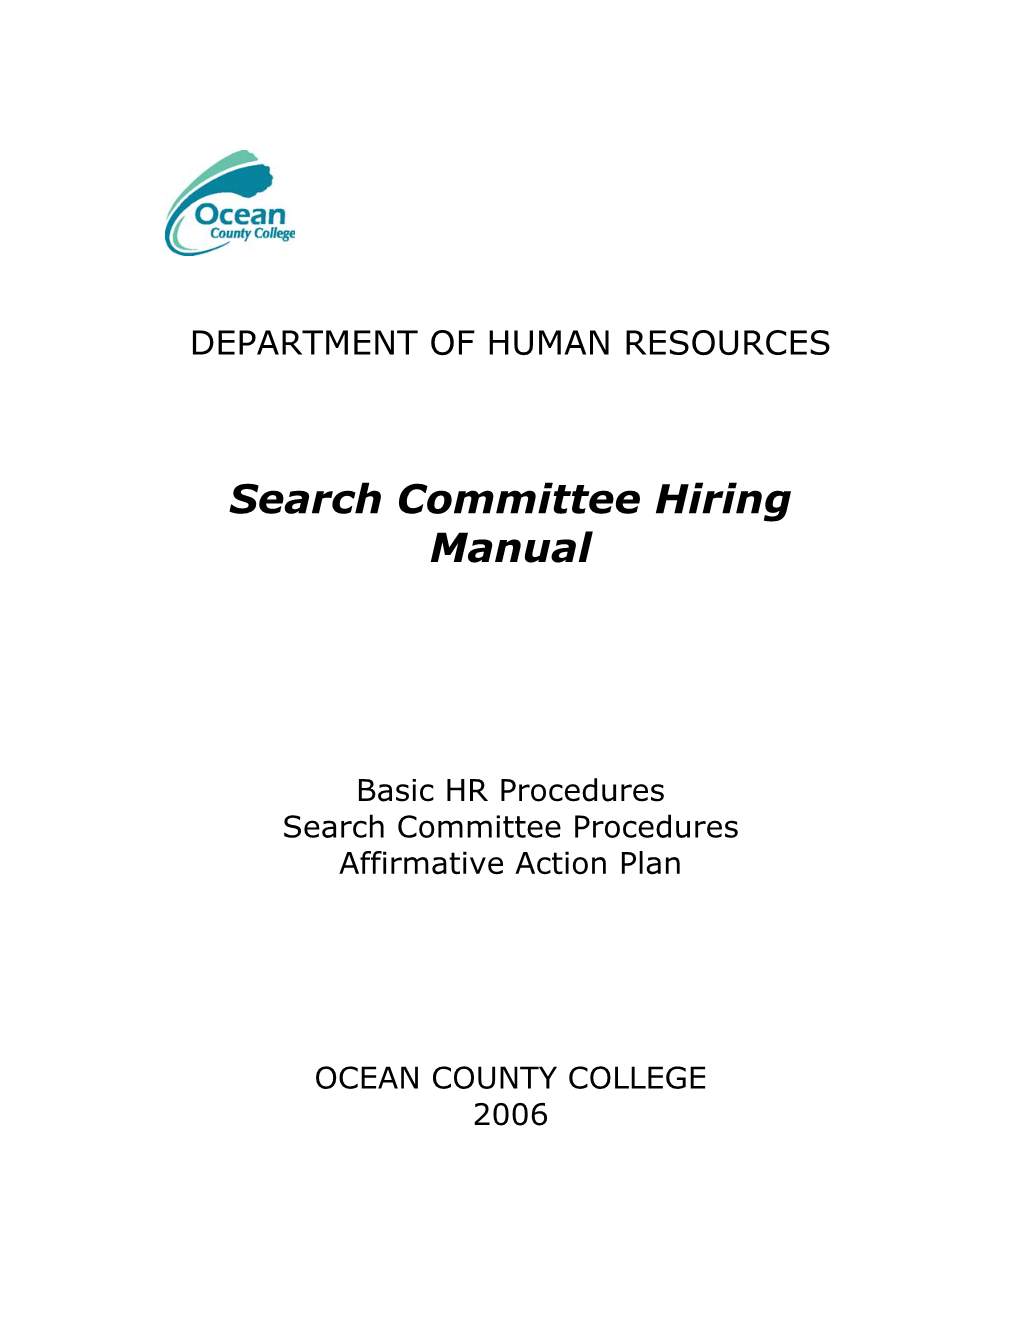 Search Committee Hiring Manual